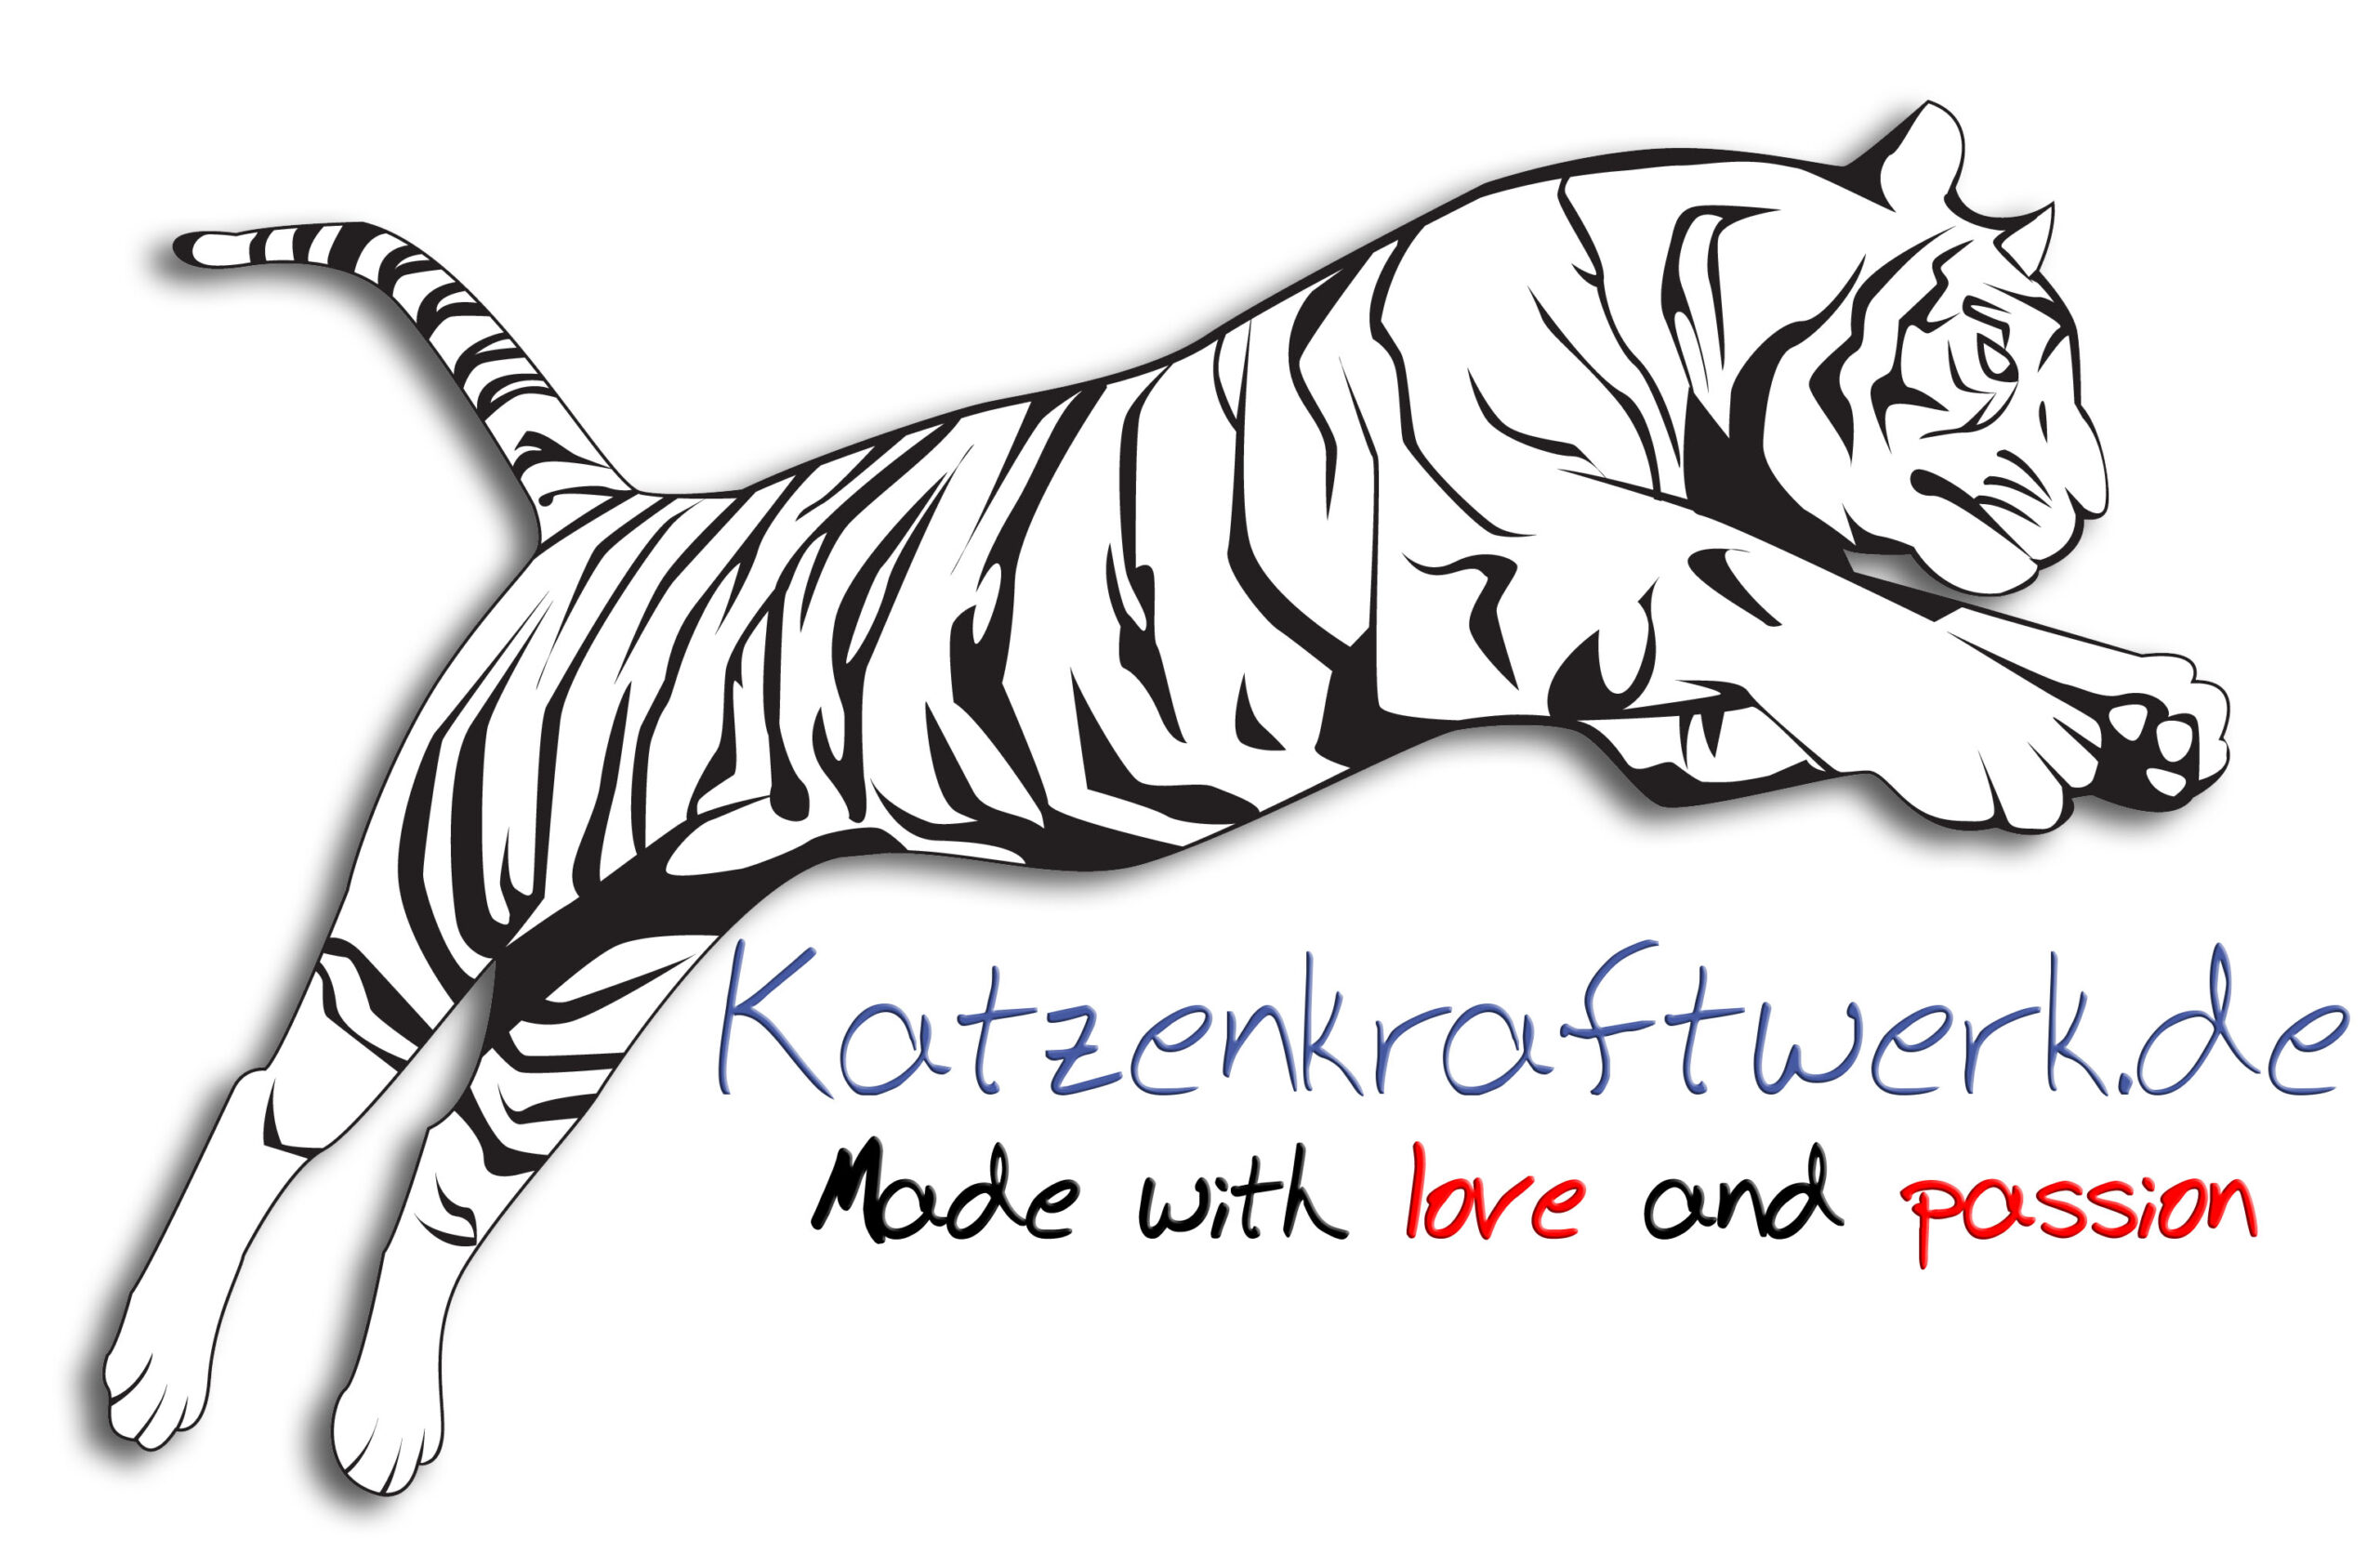 Katzenkraftwerk.de – Made with love and passion